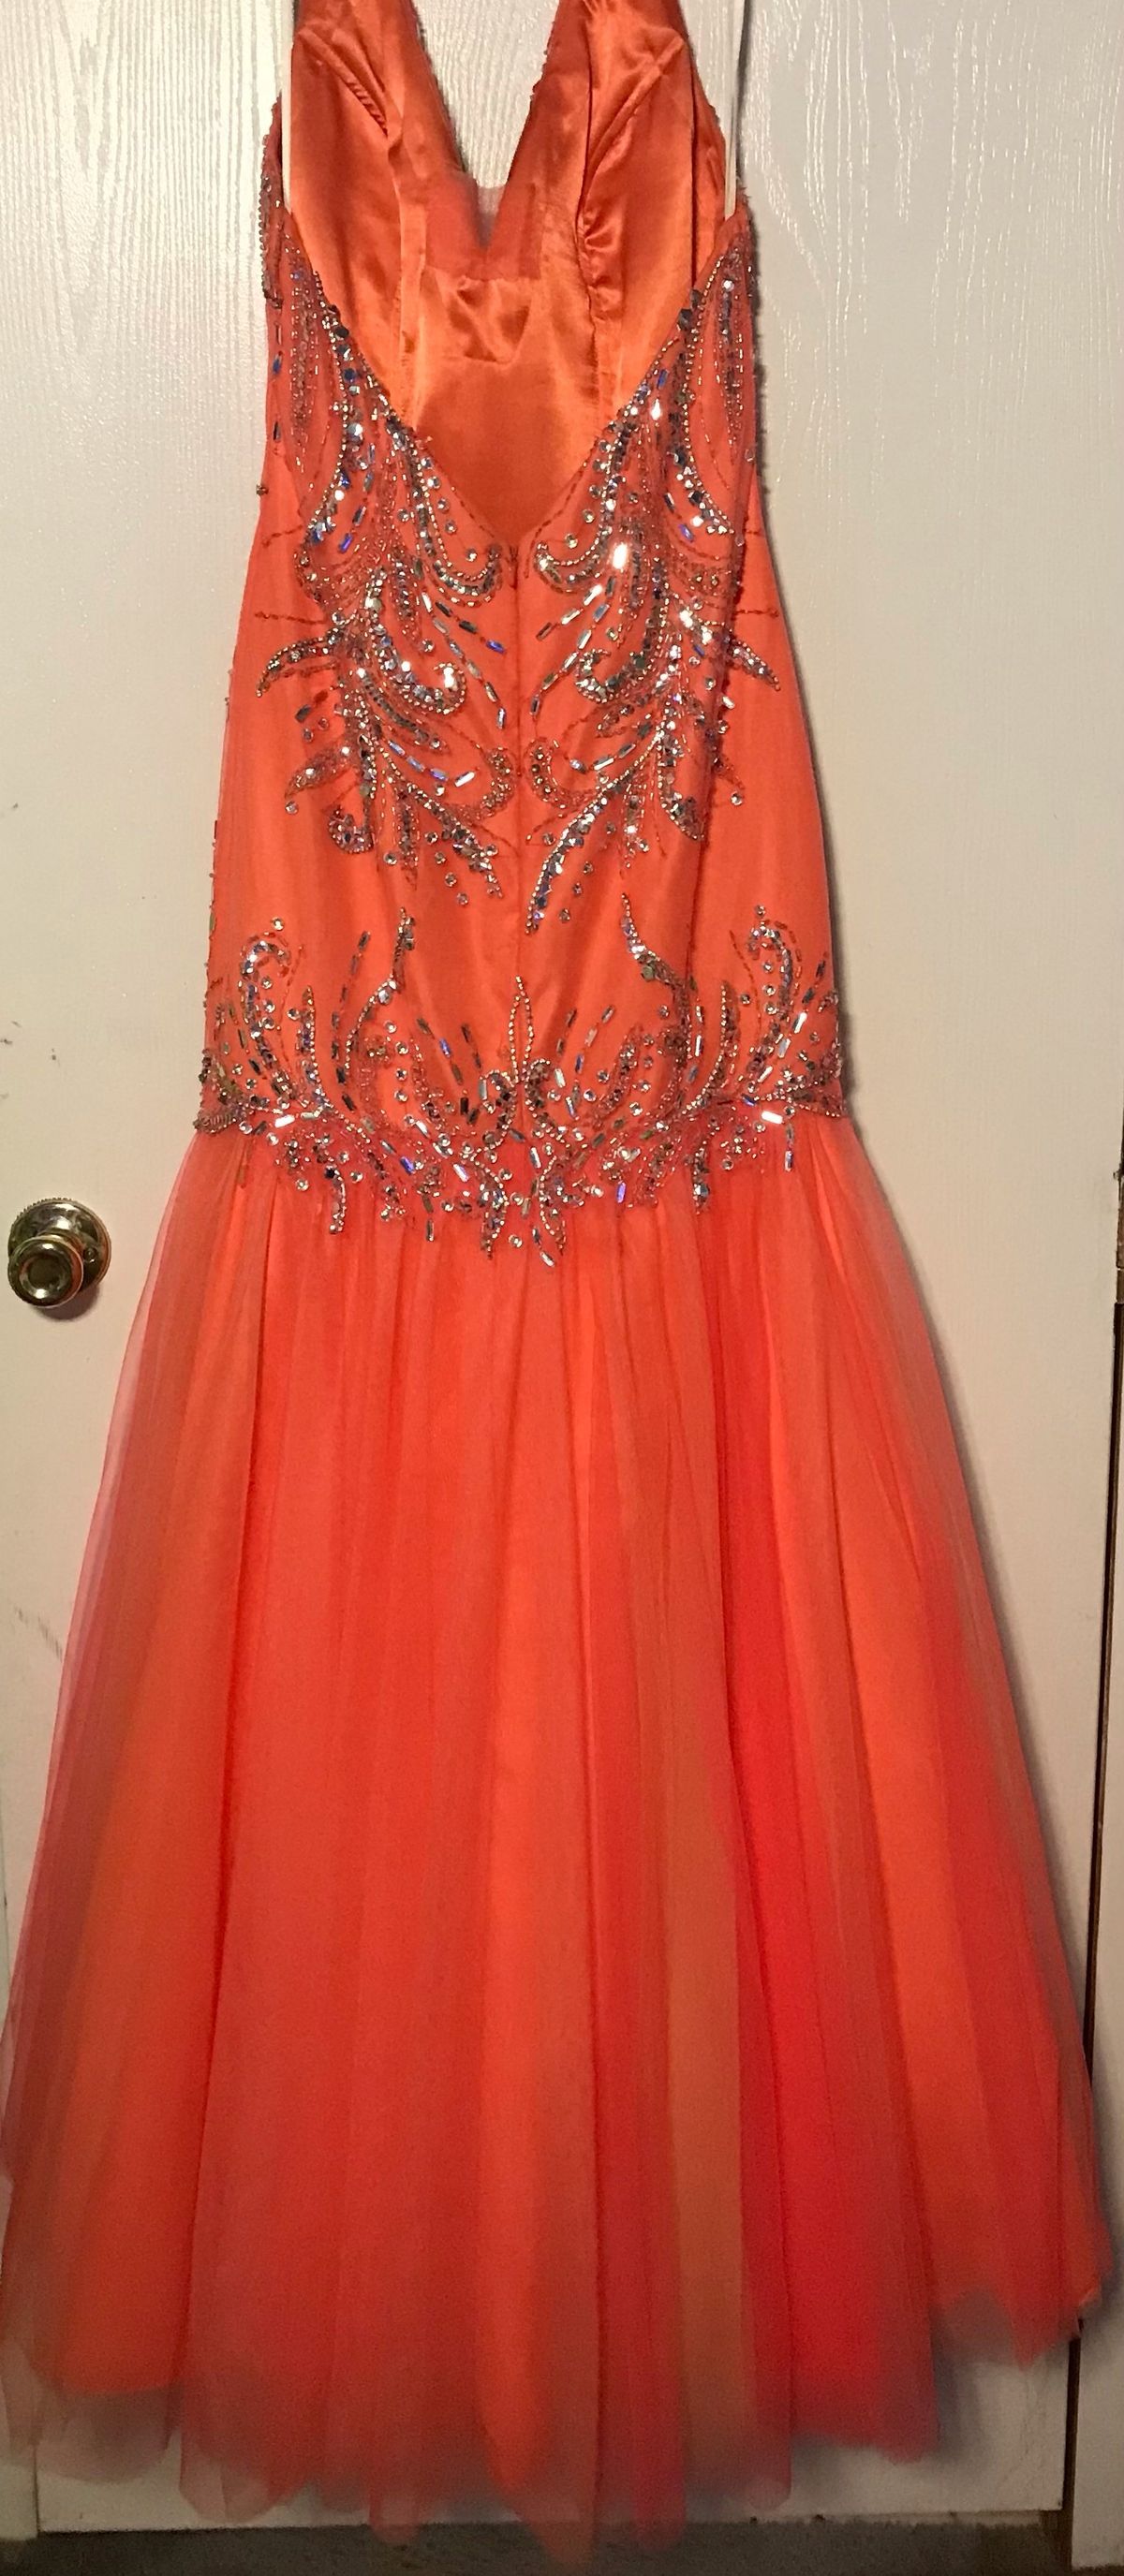 Size 10 Prom Orange Mermaid Dress on Queenly